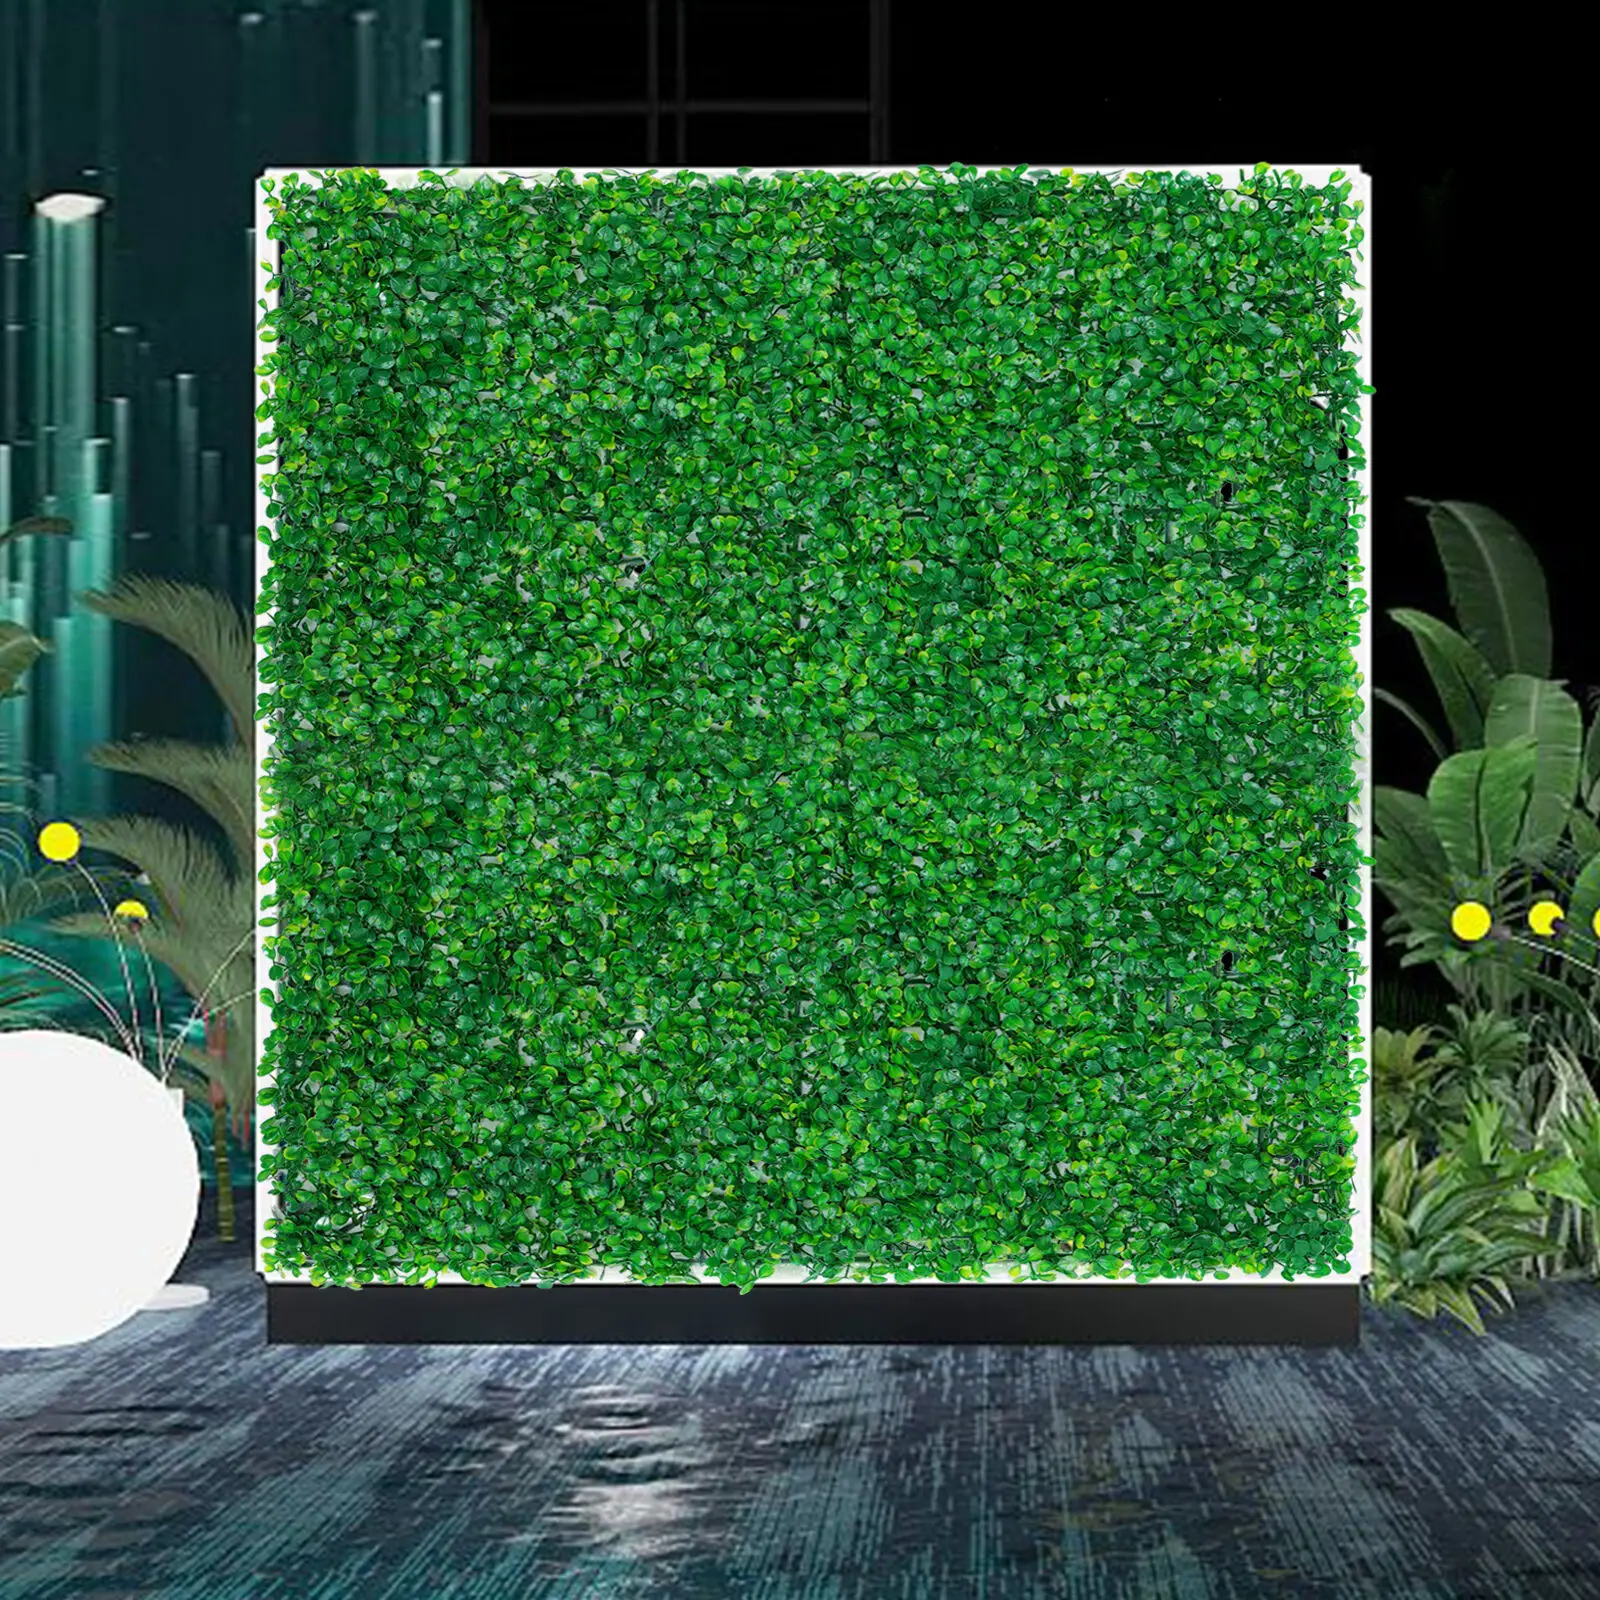 

12Pcs Grass Wall Artificial Boxwood Panels Hedge Plant Grass Backdrop Wall Panels Green Wall Decor Outdoor Garden 60x40x4cm